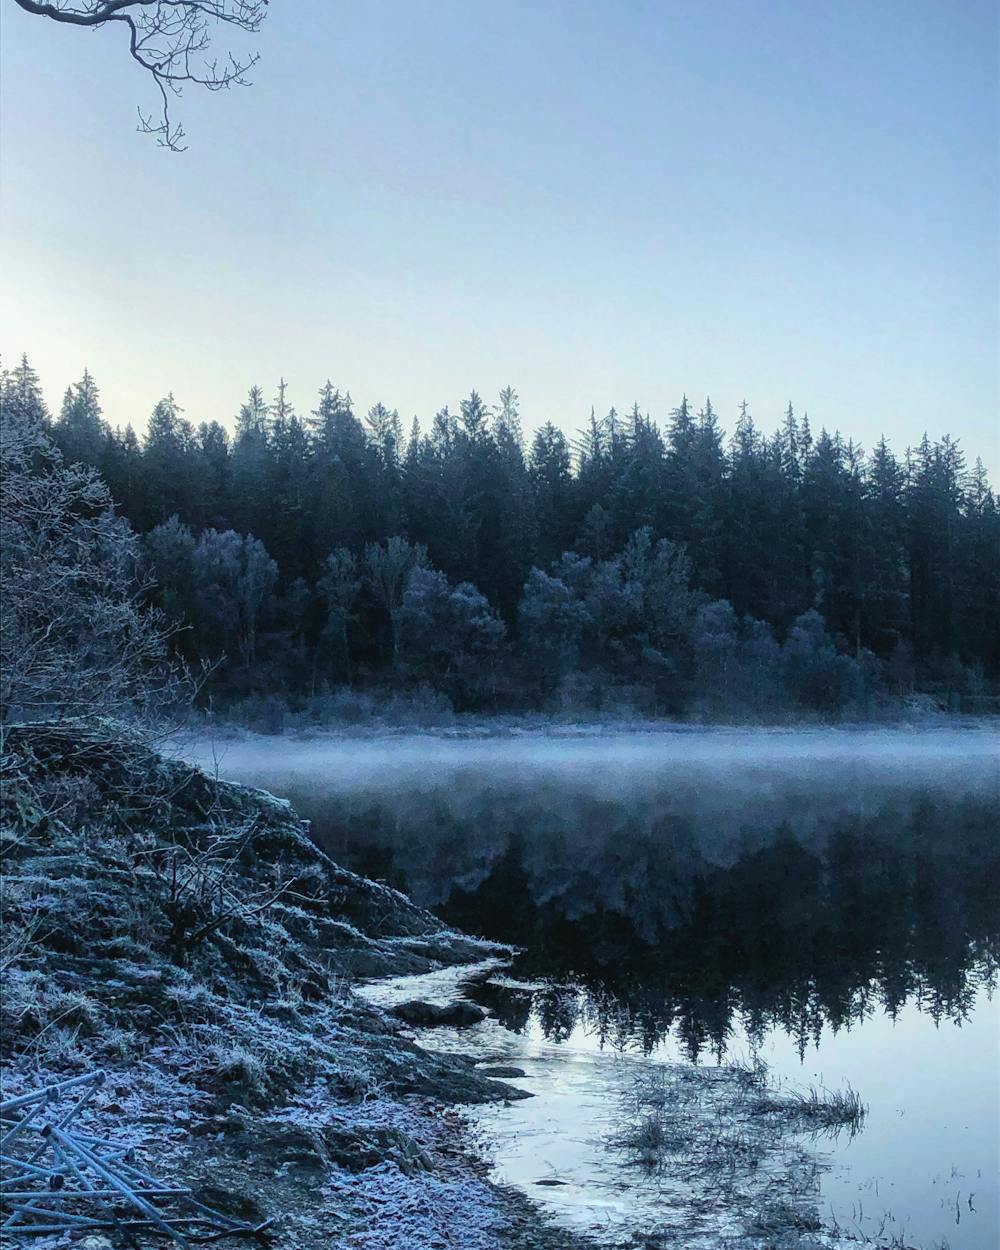 Loch Achray on a cold, frosty morning